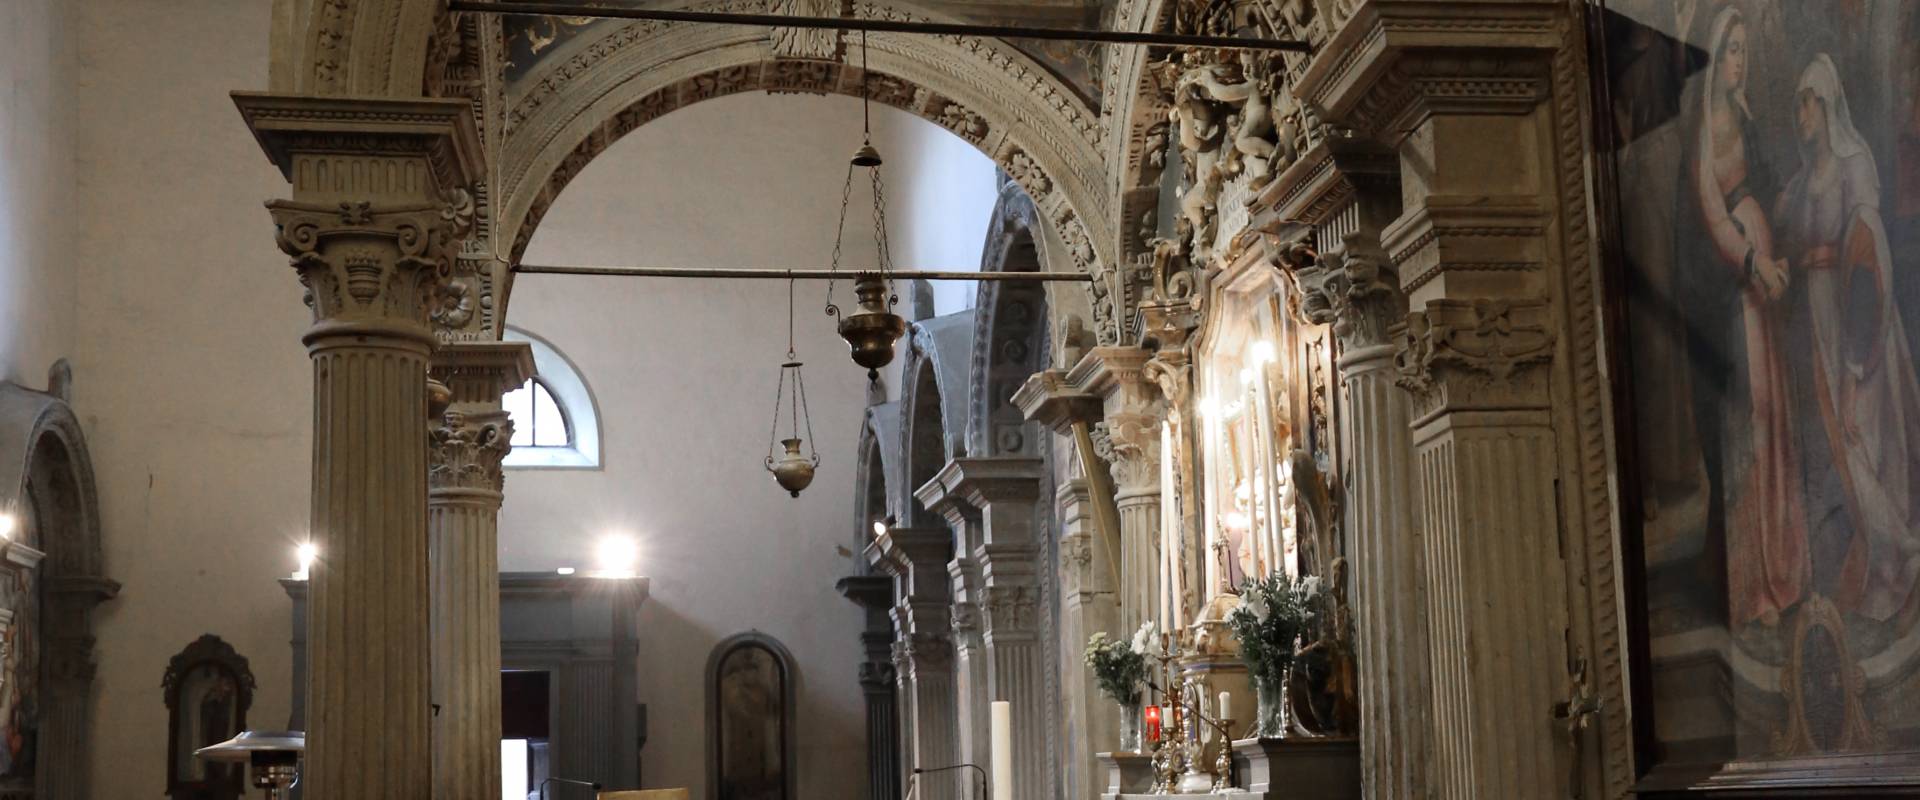 Pianetto (galeata), santa maria dei miracoli, interno 05 photo by Sailko